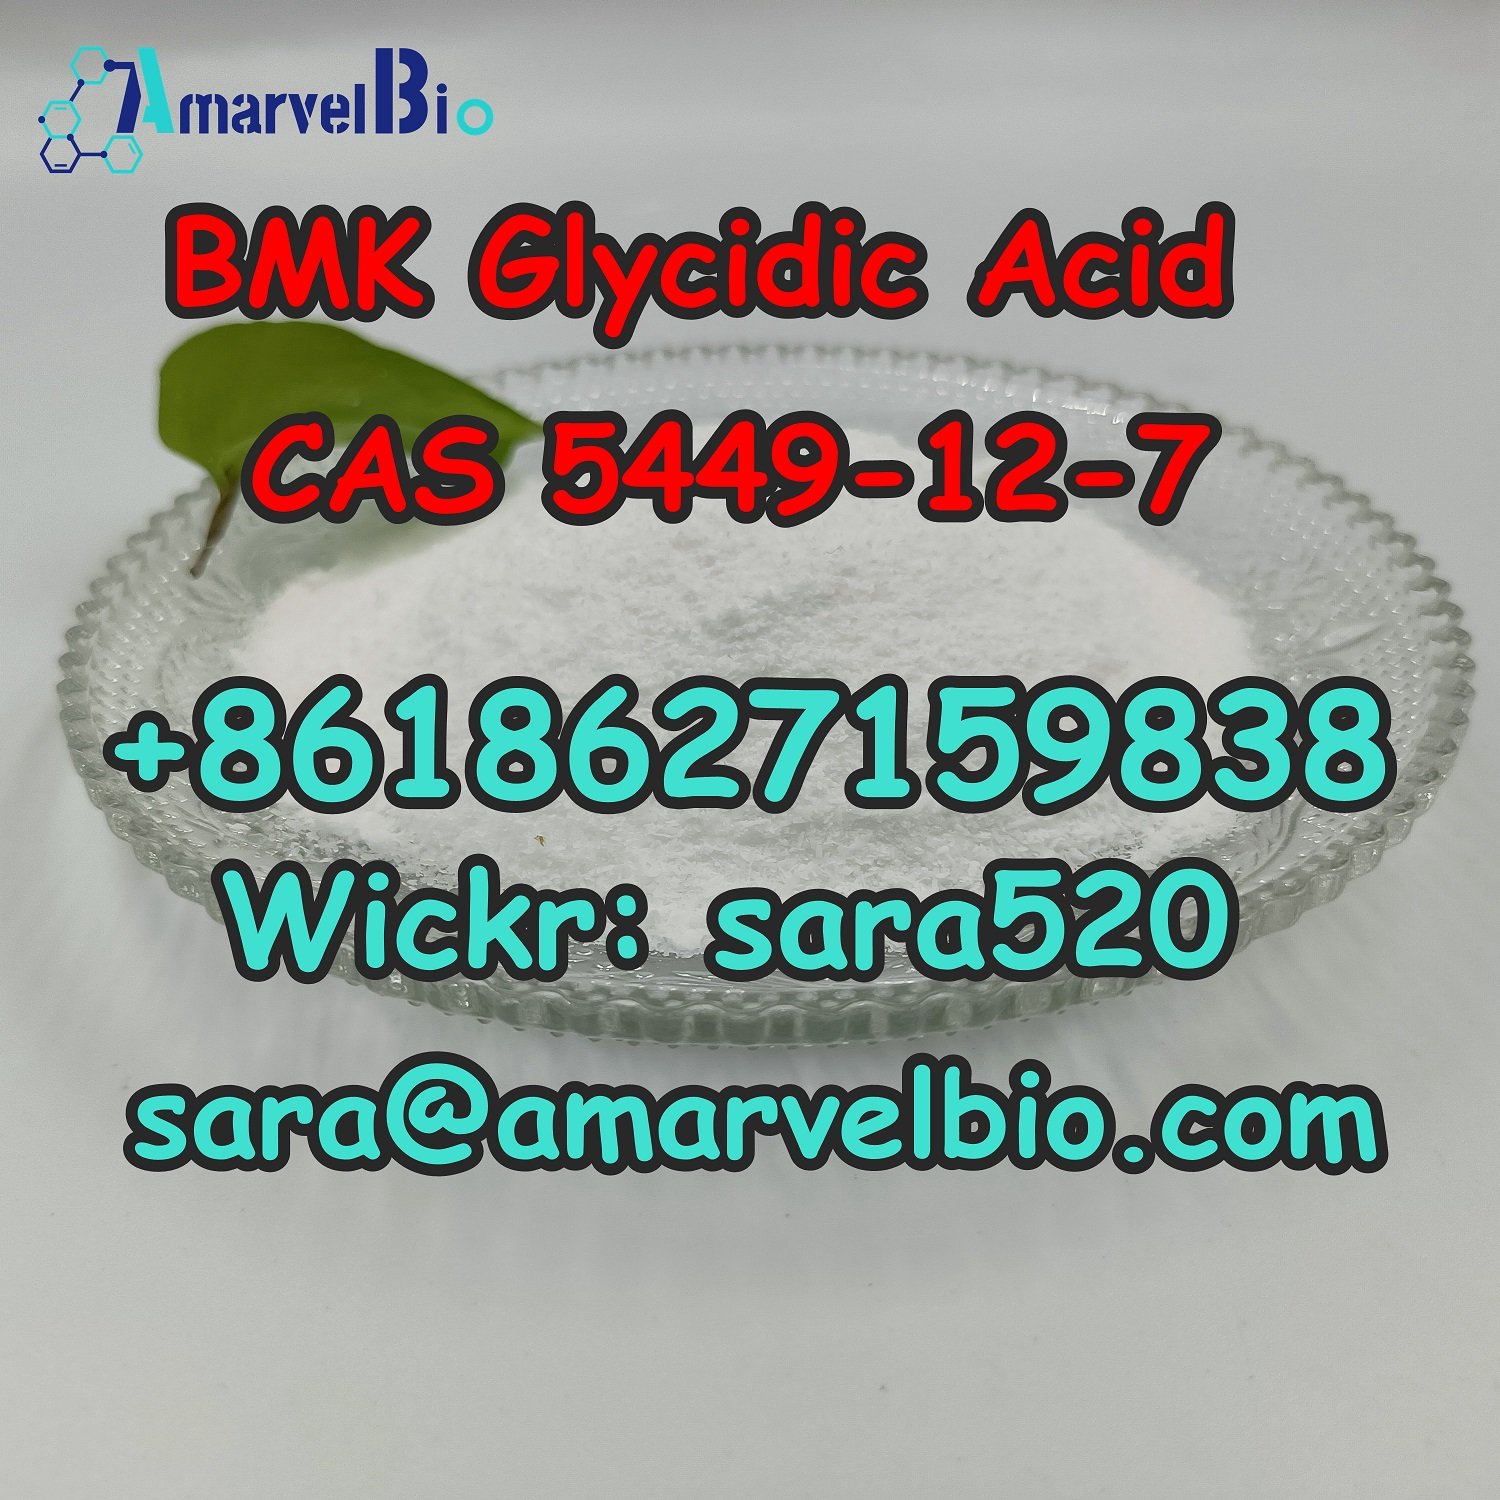 +8618627159838 CAS 5449-12-7 BMK Glycidic Acid Manufacturer Supply